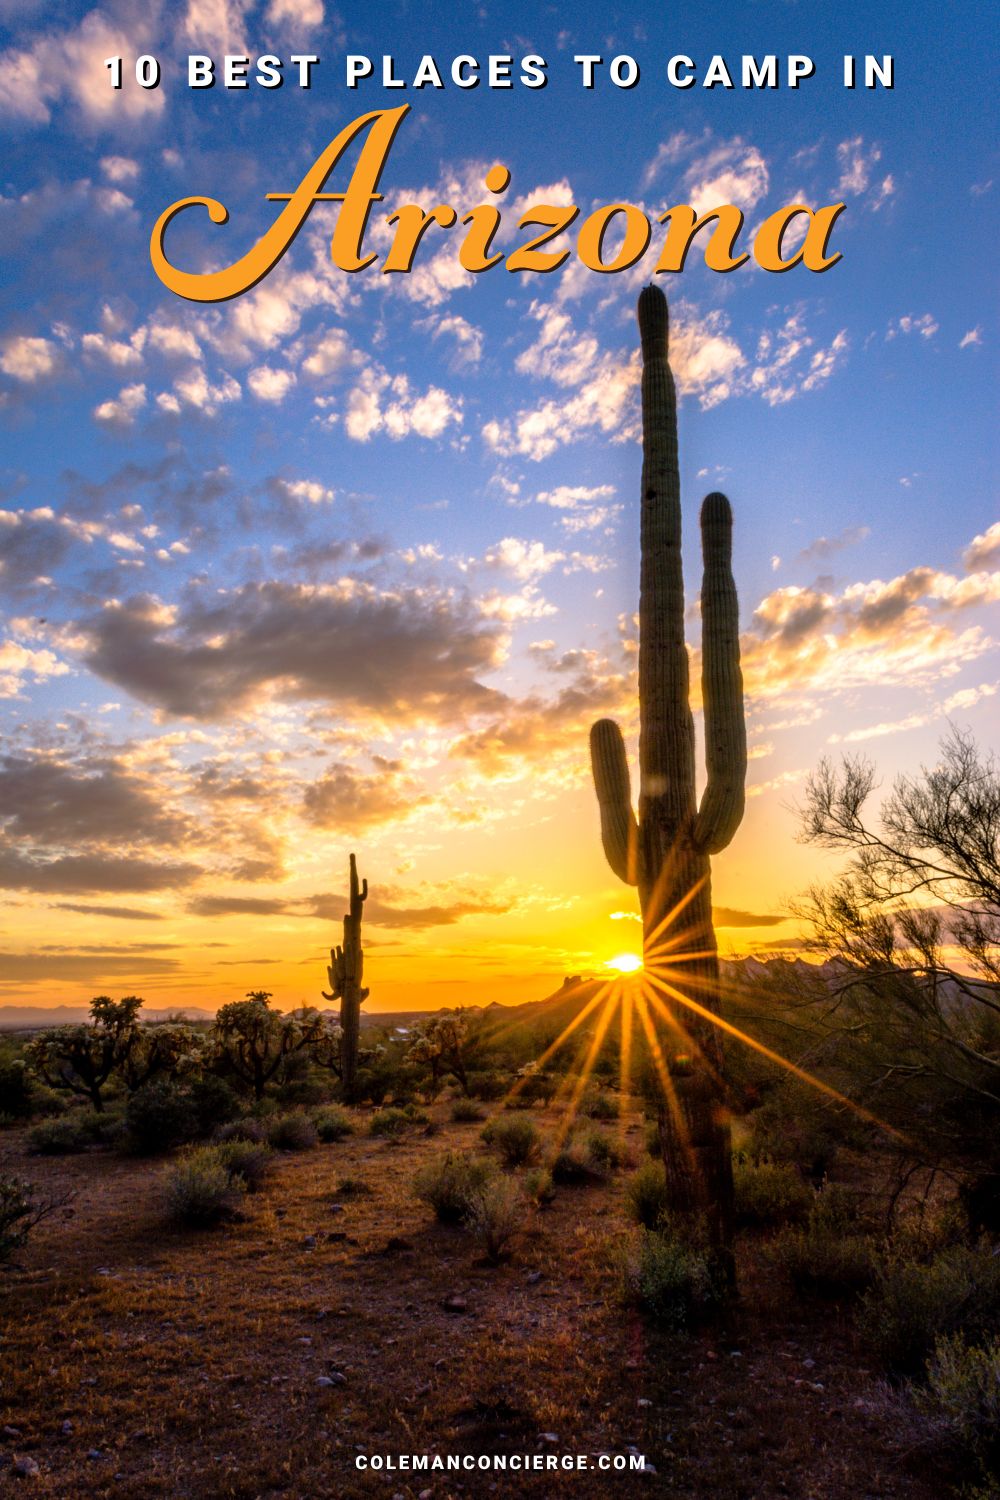 10 Best Places to Camp in Arizona - Coleman Concierge